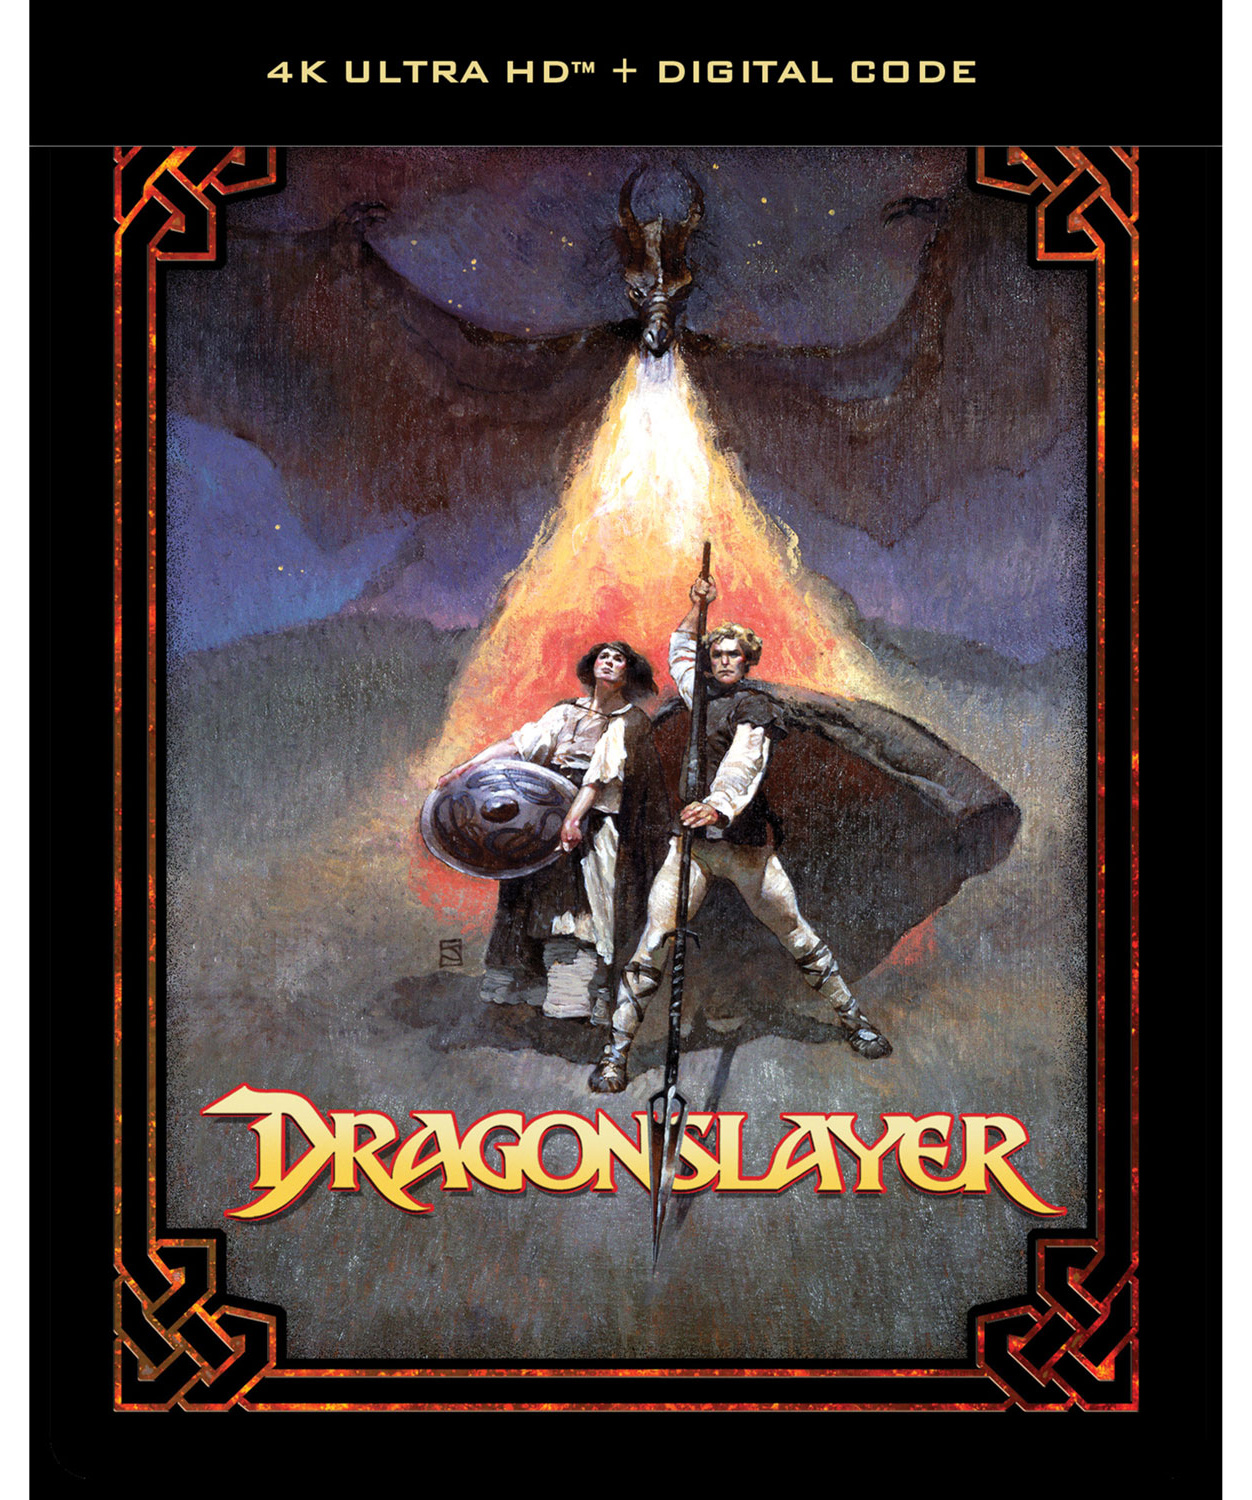 Dragonslayer SteelBook front.jpg